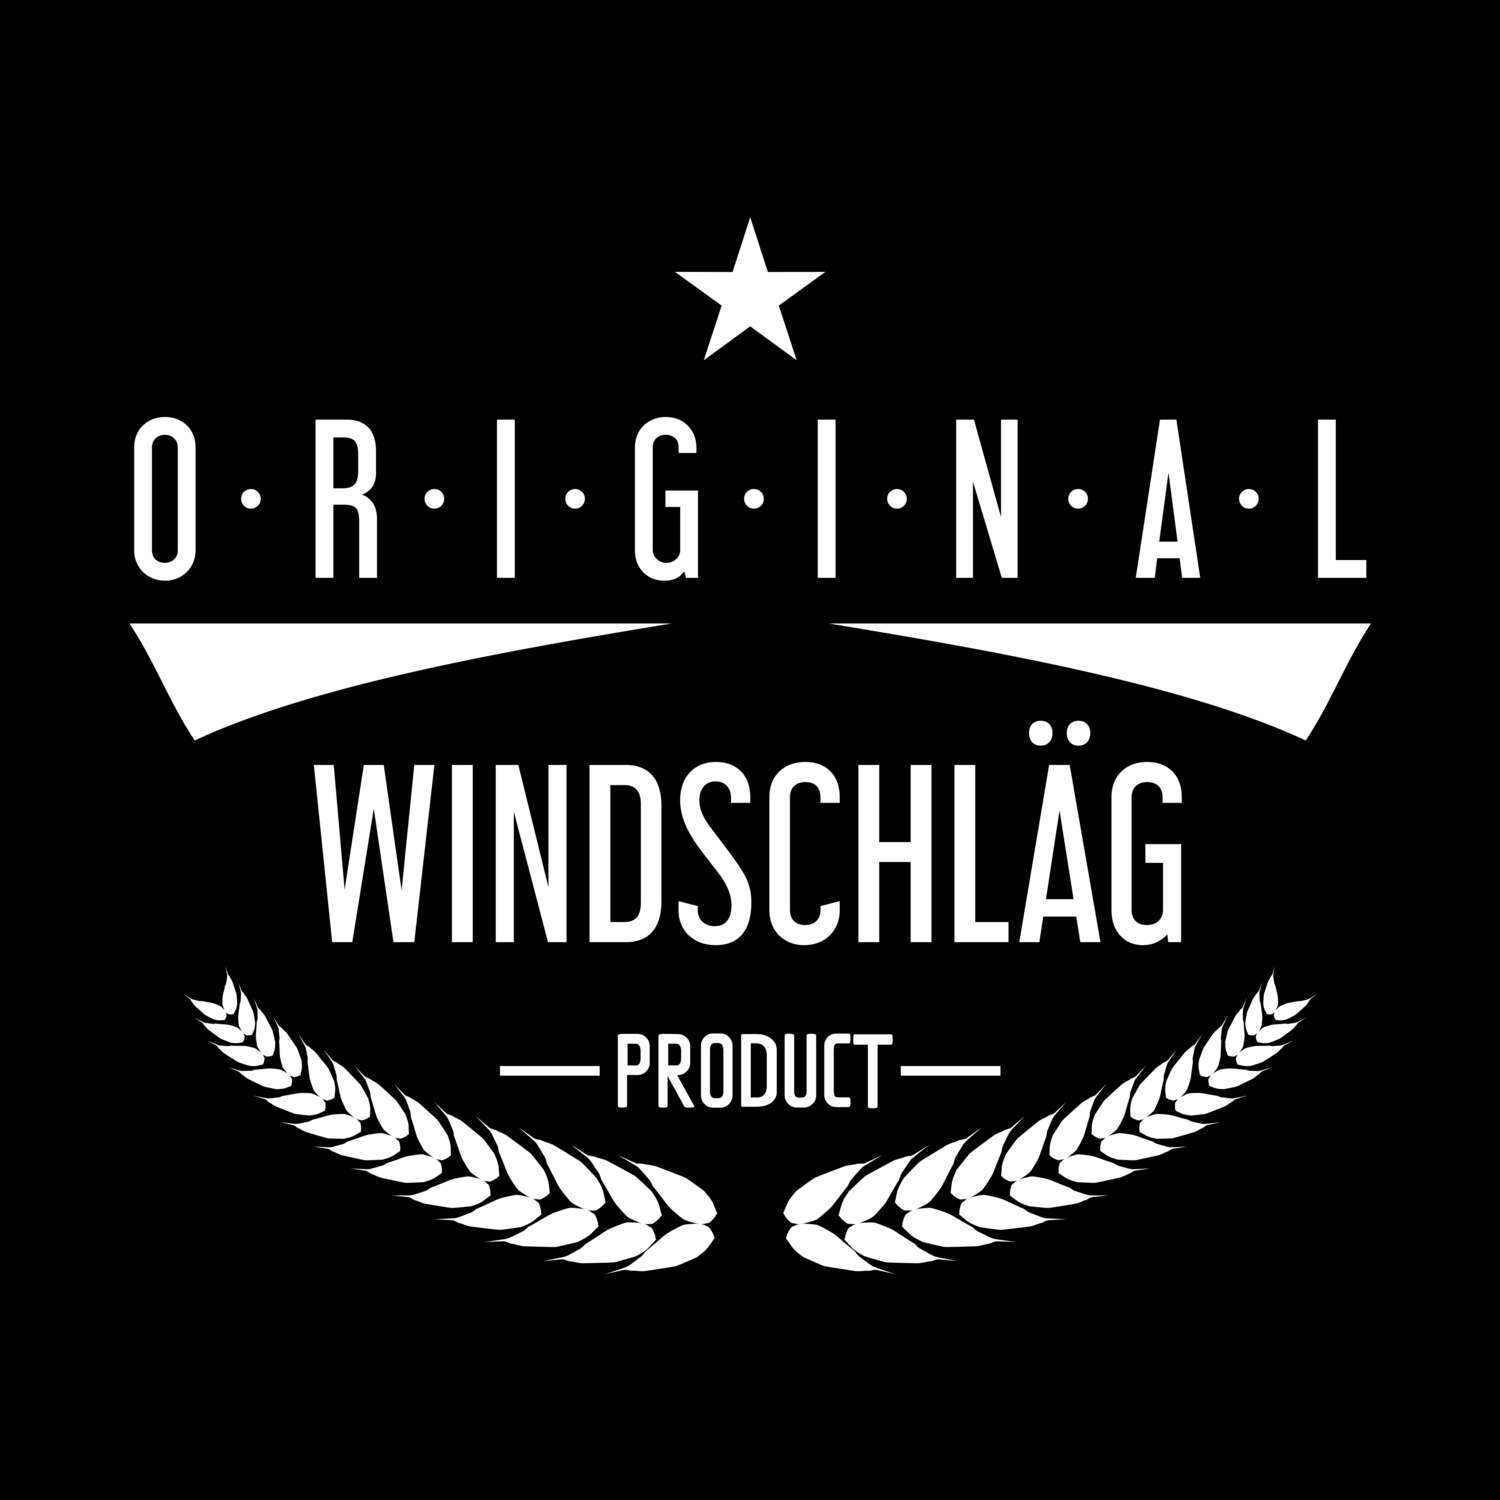 Windschläg T-Shirt »Original Product«